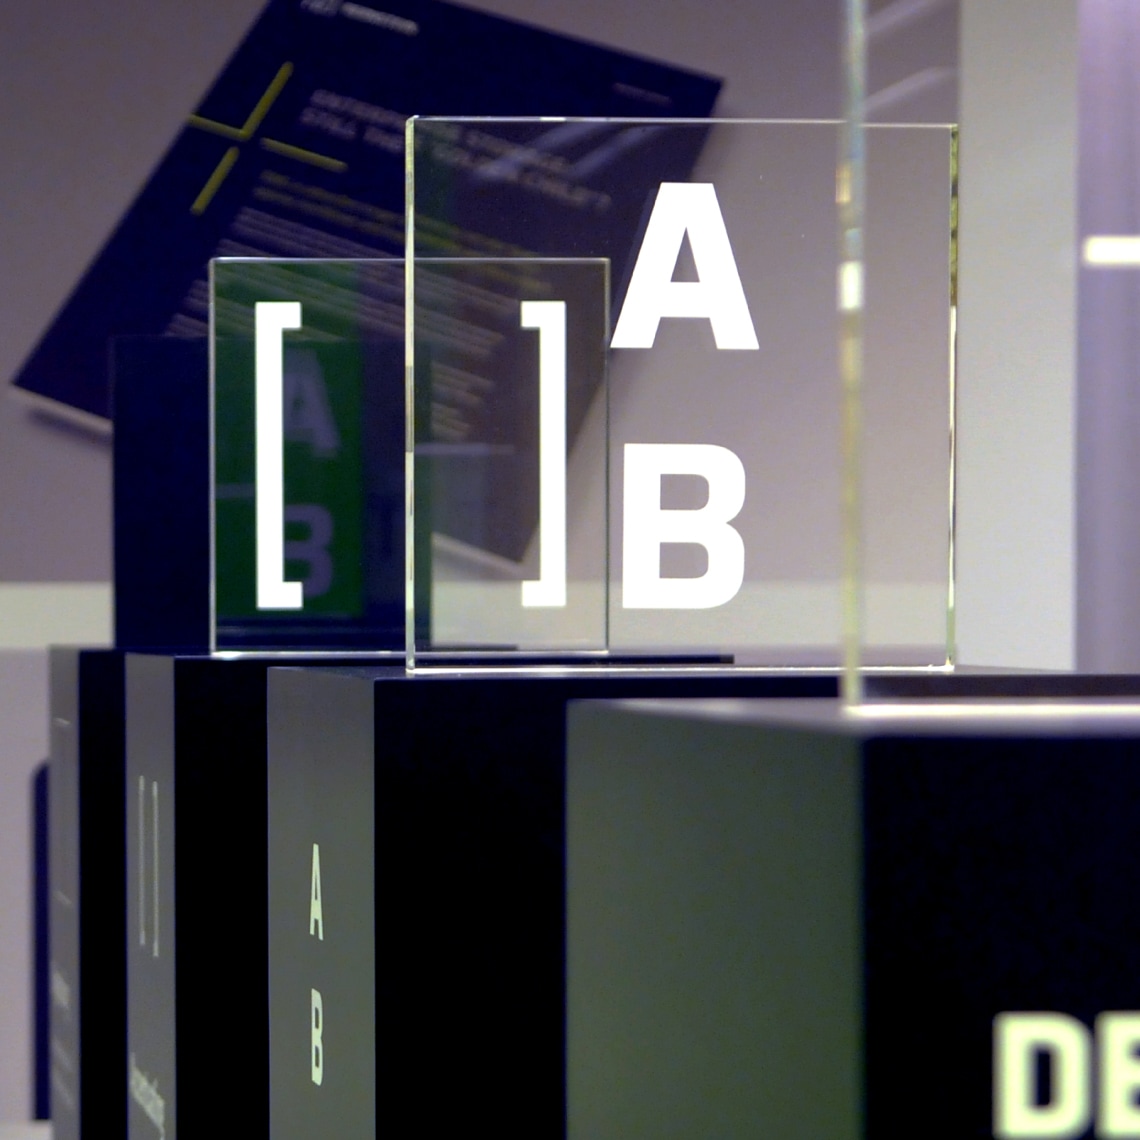 The new AB (AllianceBernstein) logo on clear acrylic squares pieces